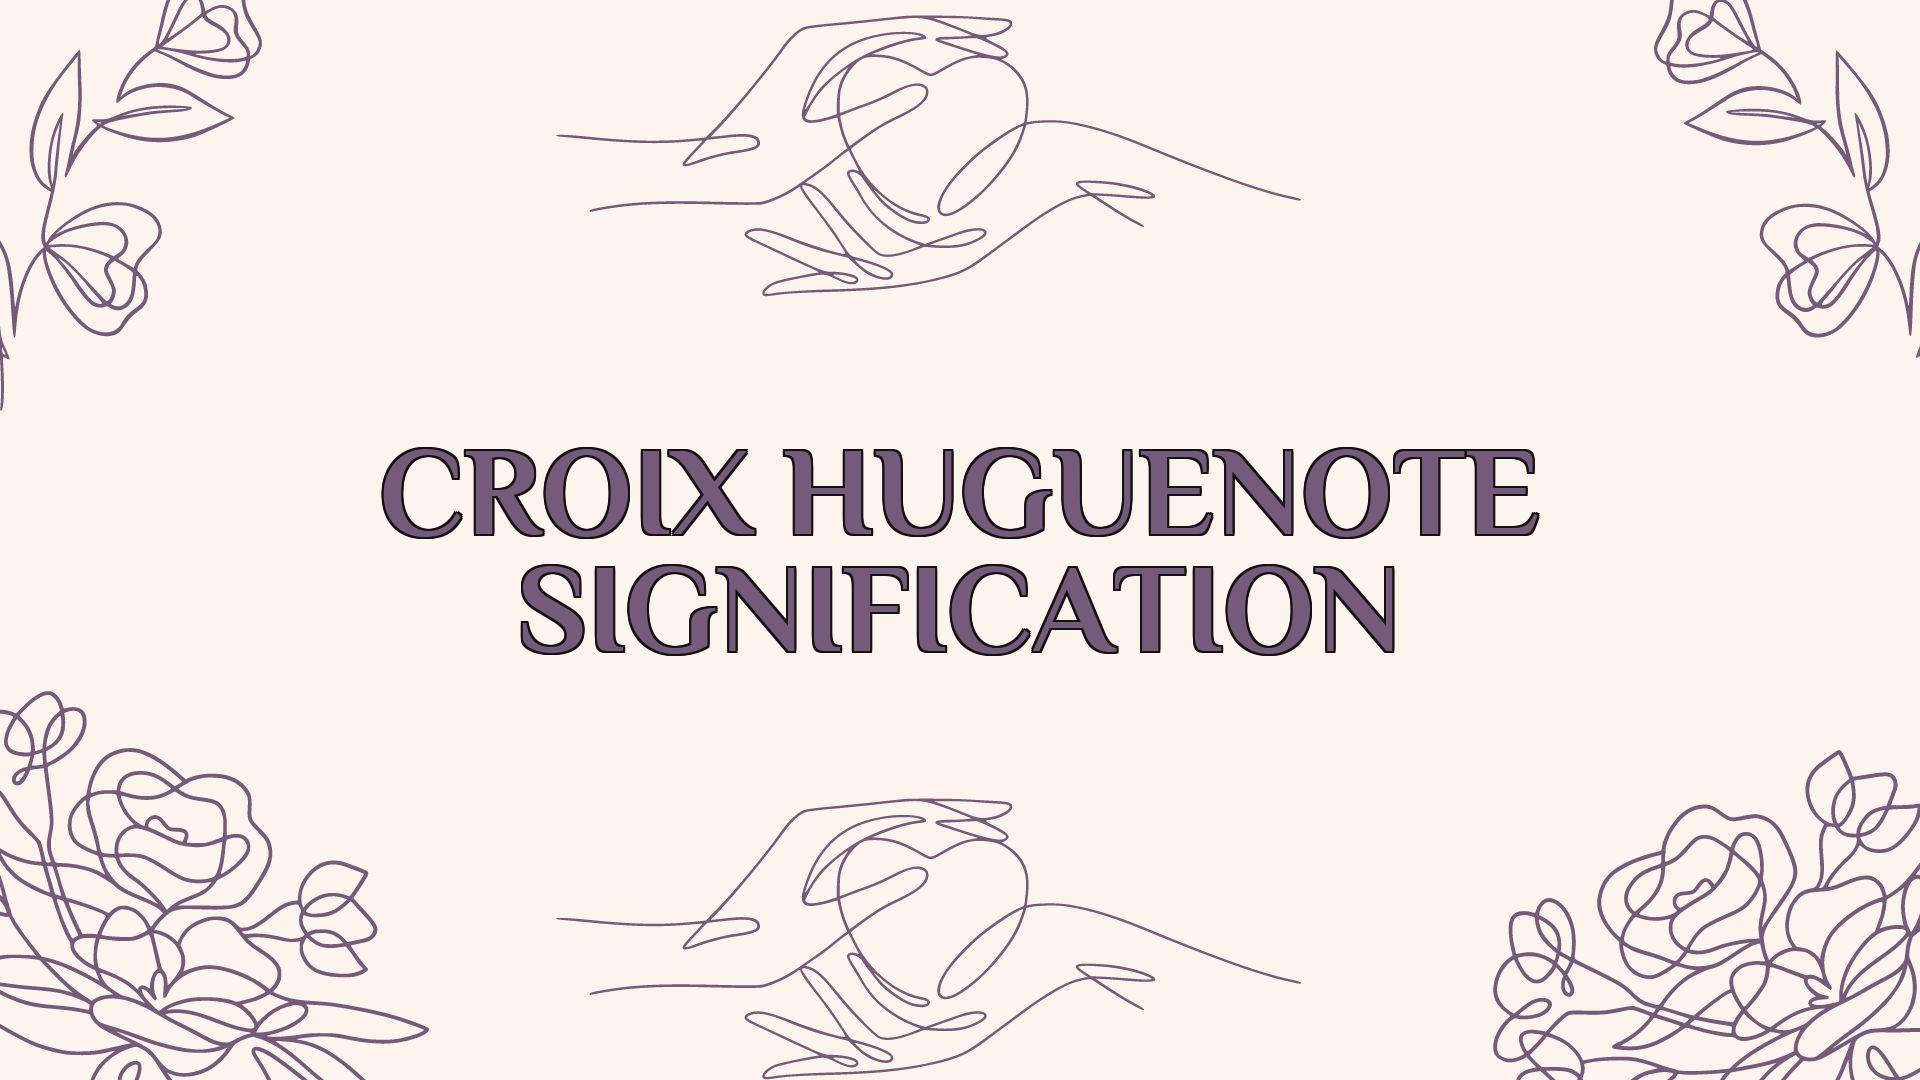 croix huguenote signification